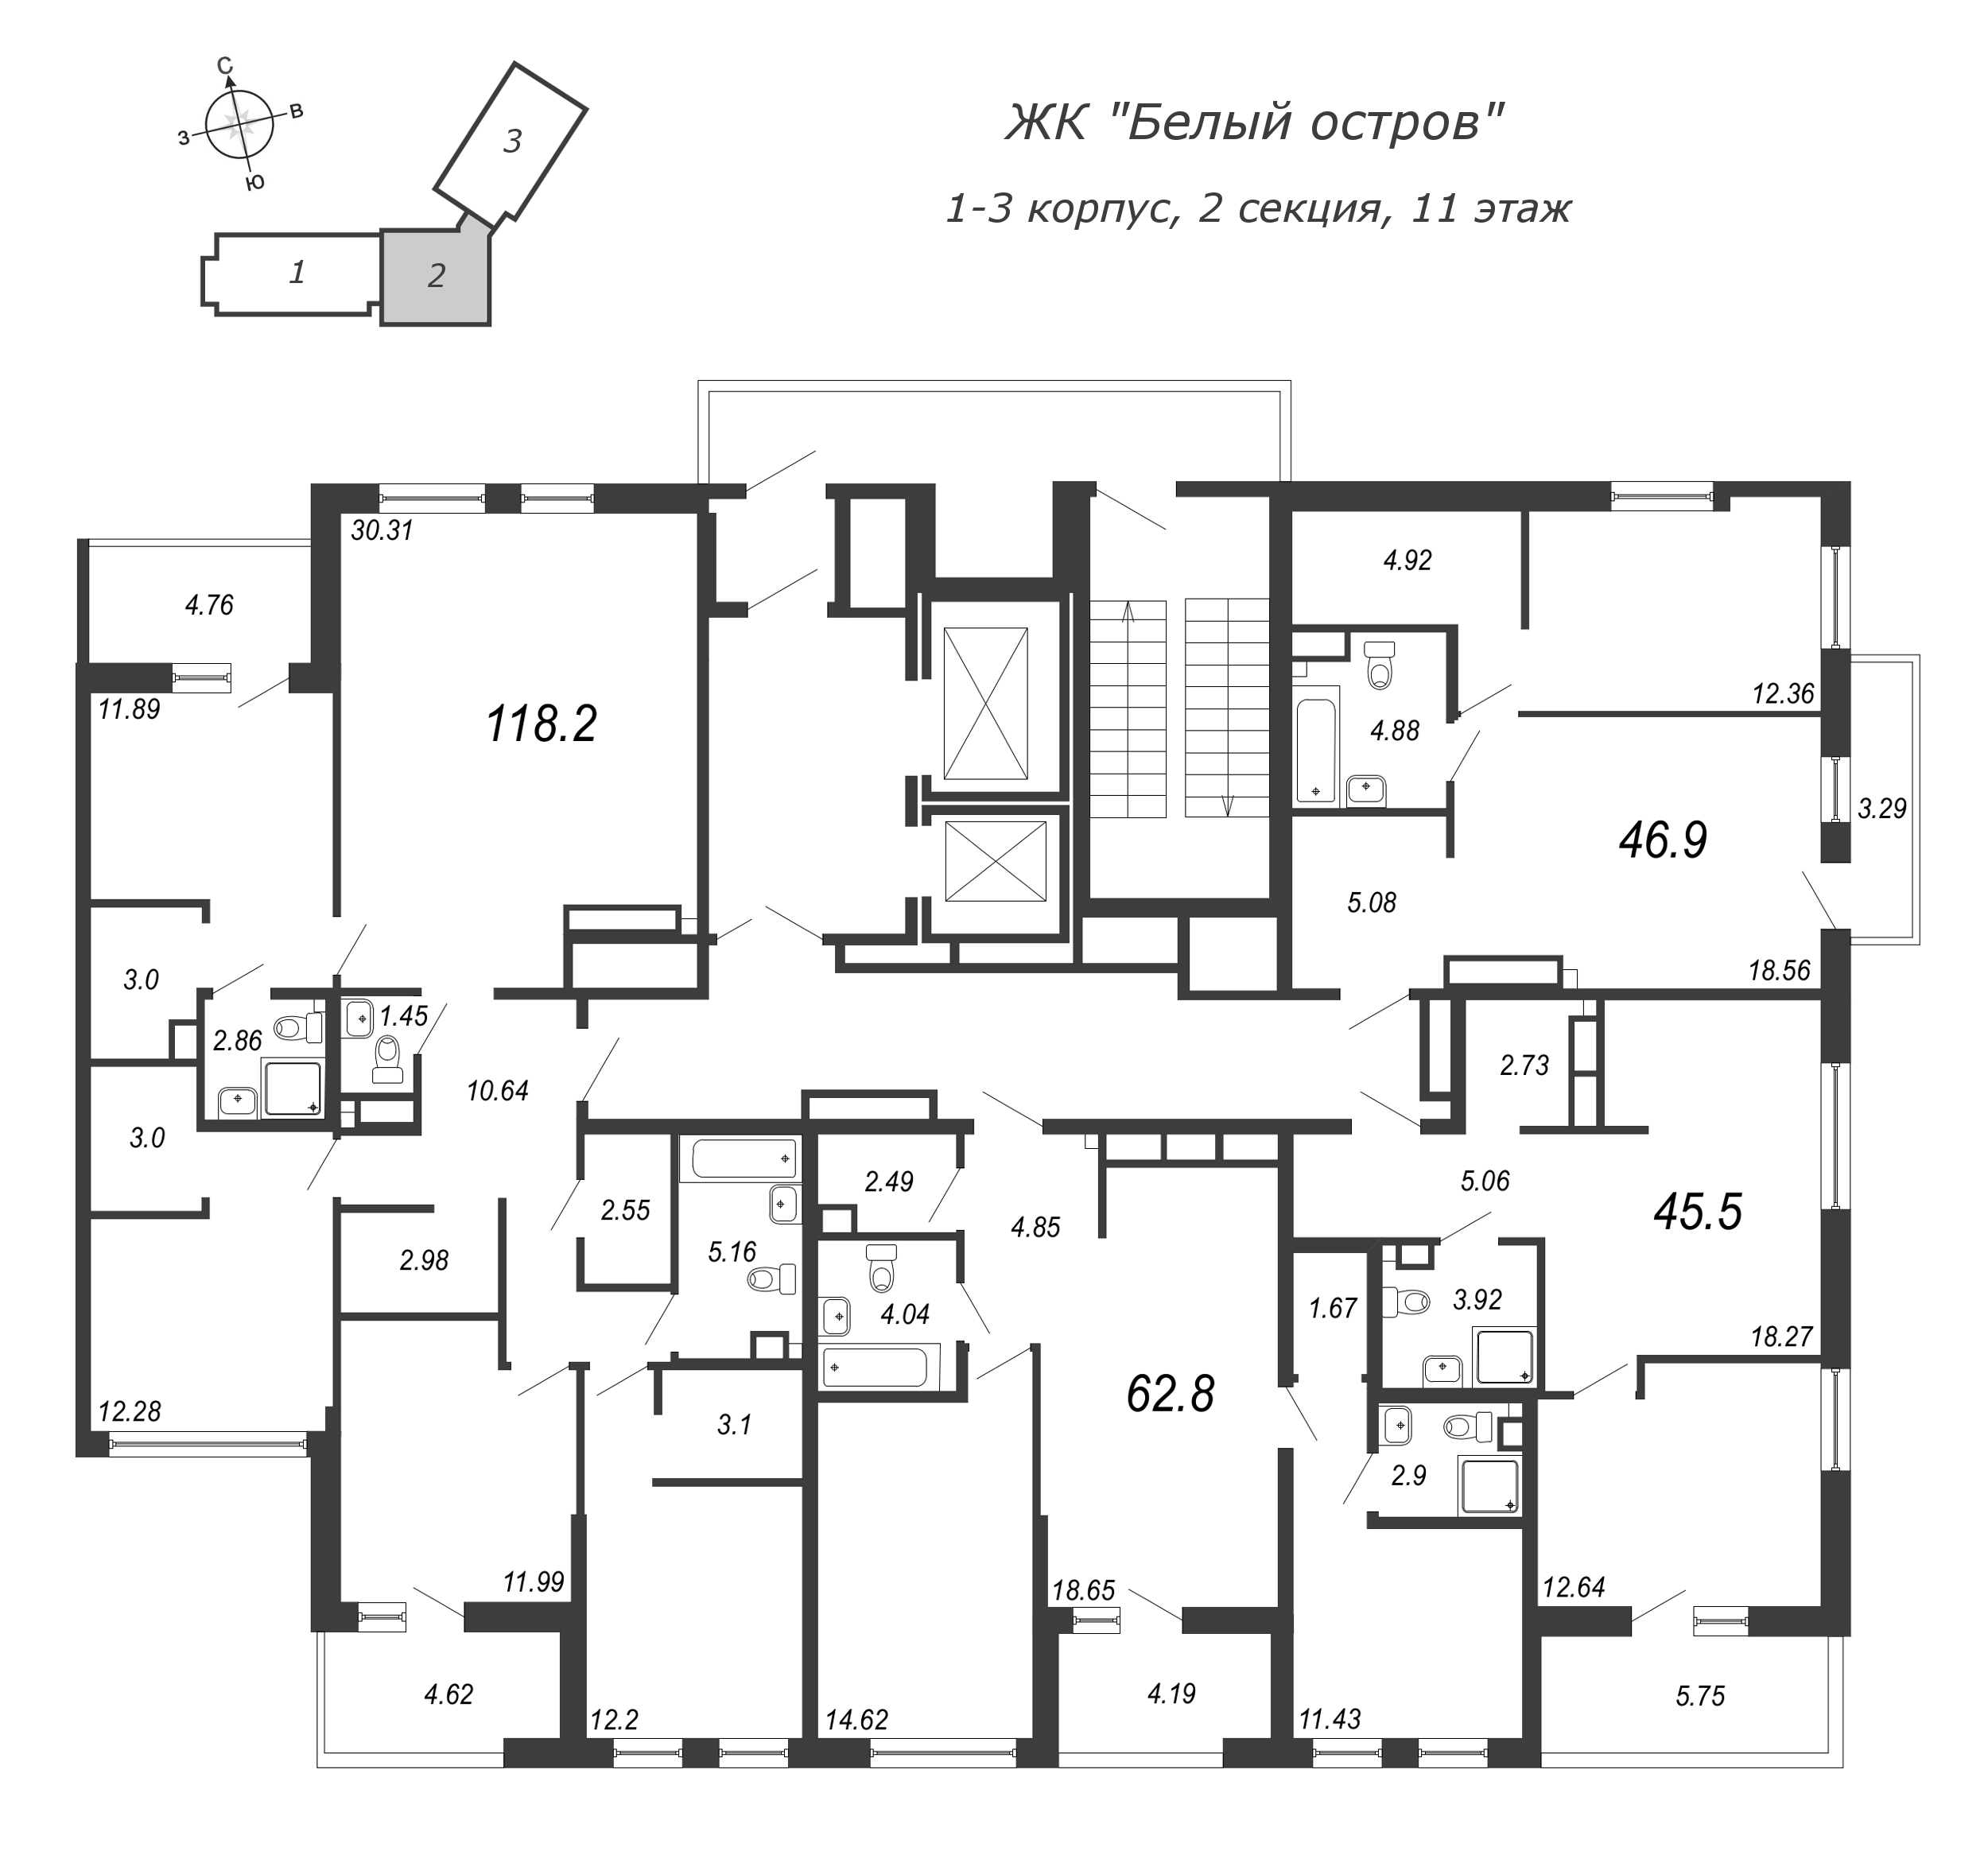 3-комнатная (Евро) квартира, 65.3 м² - планировка этажа